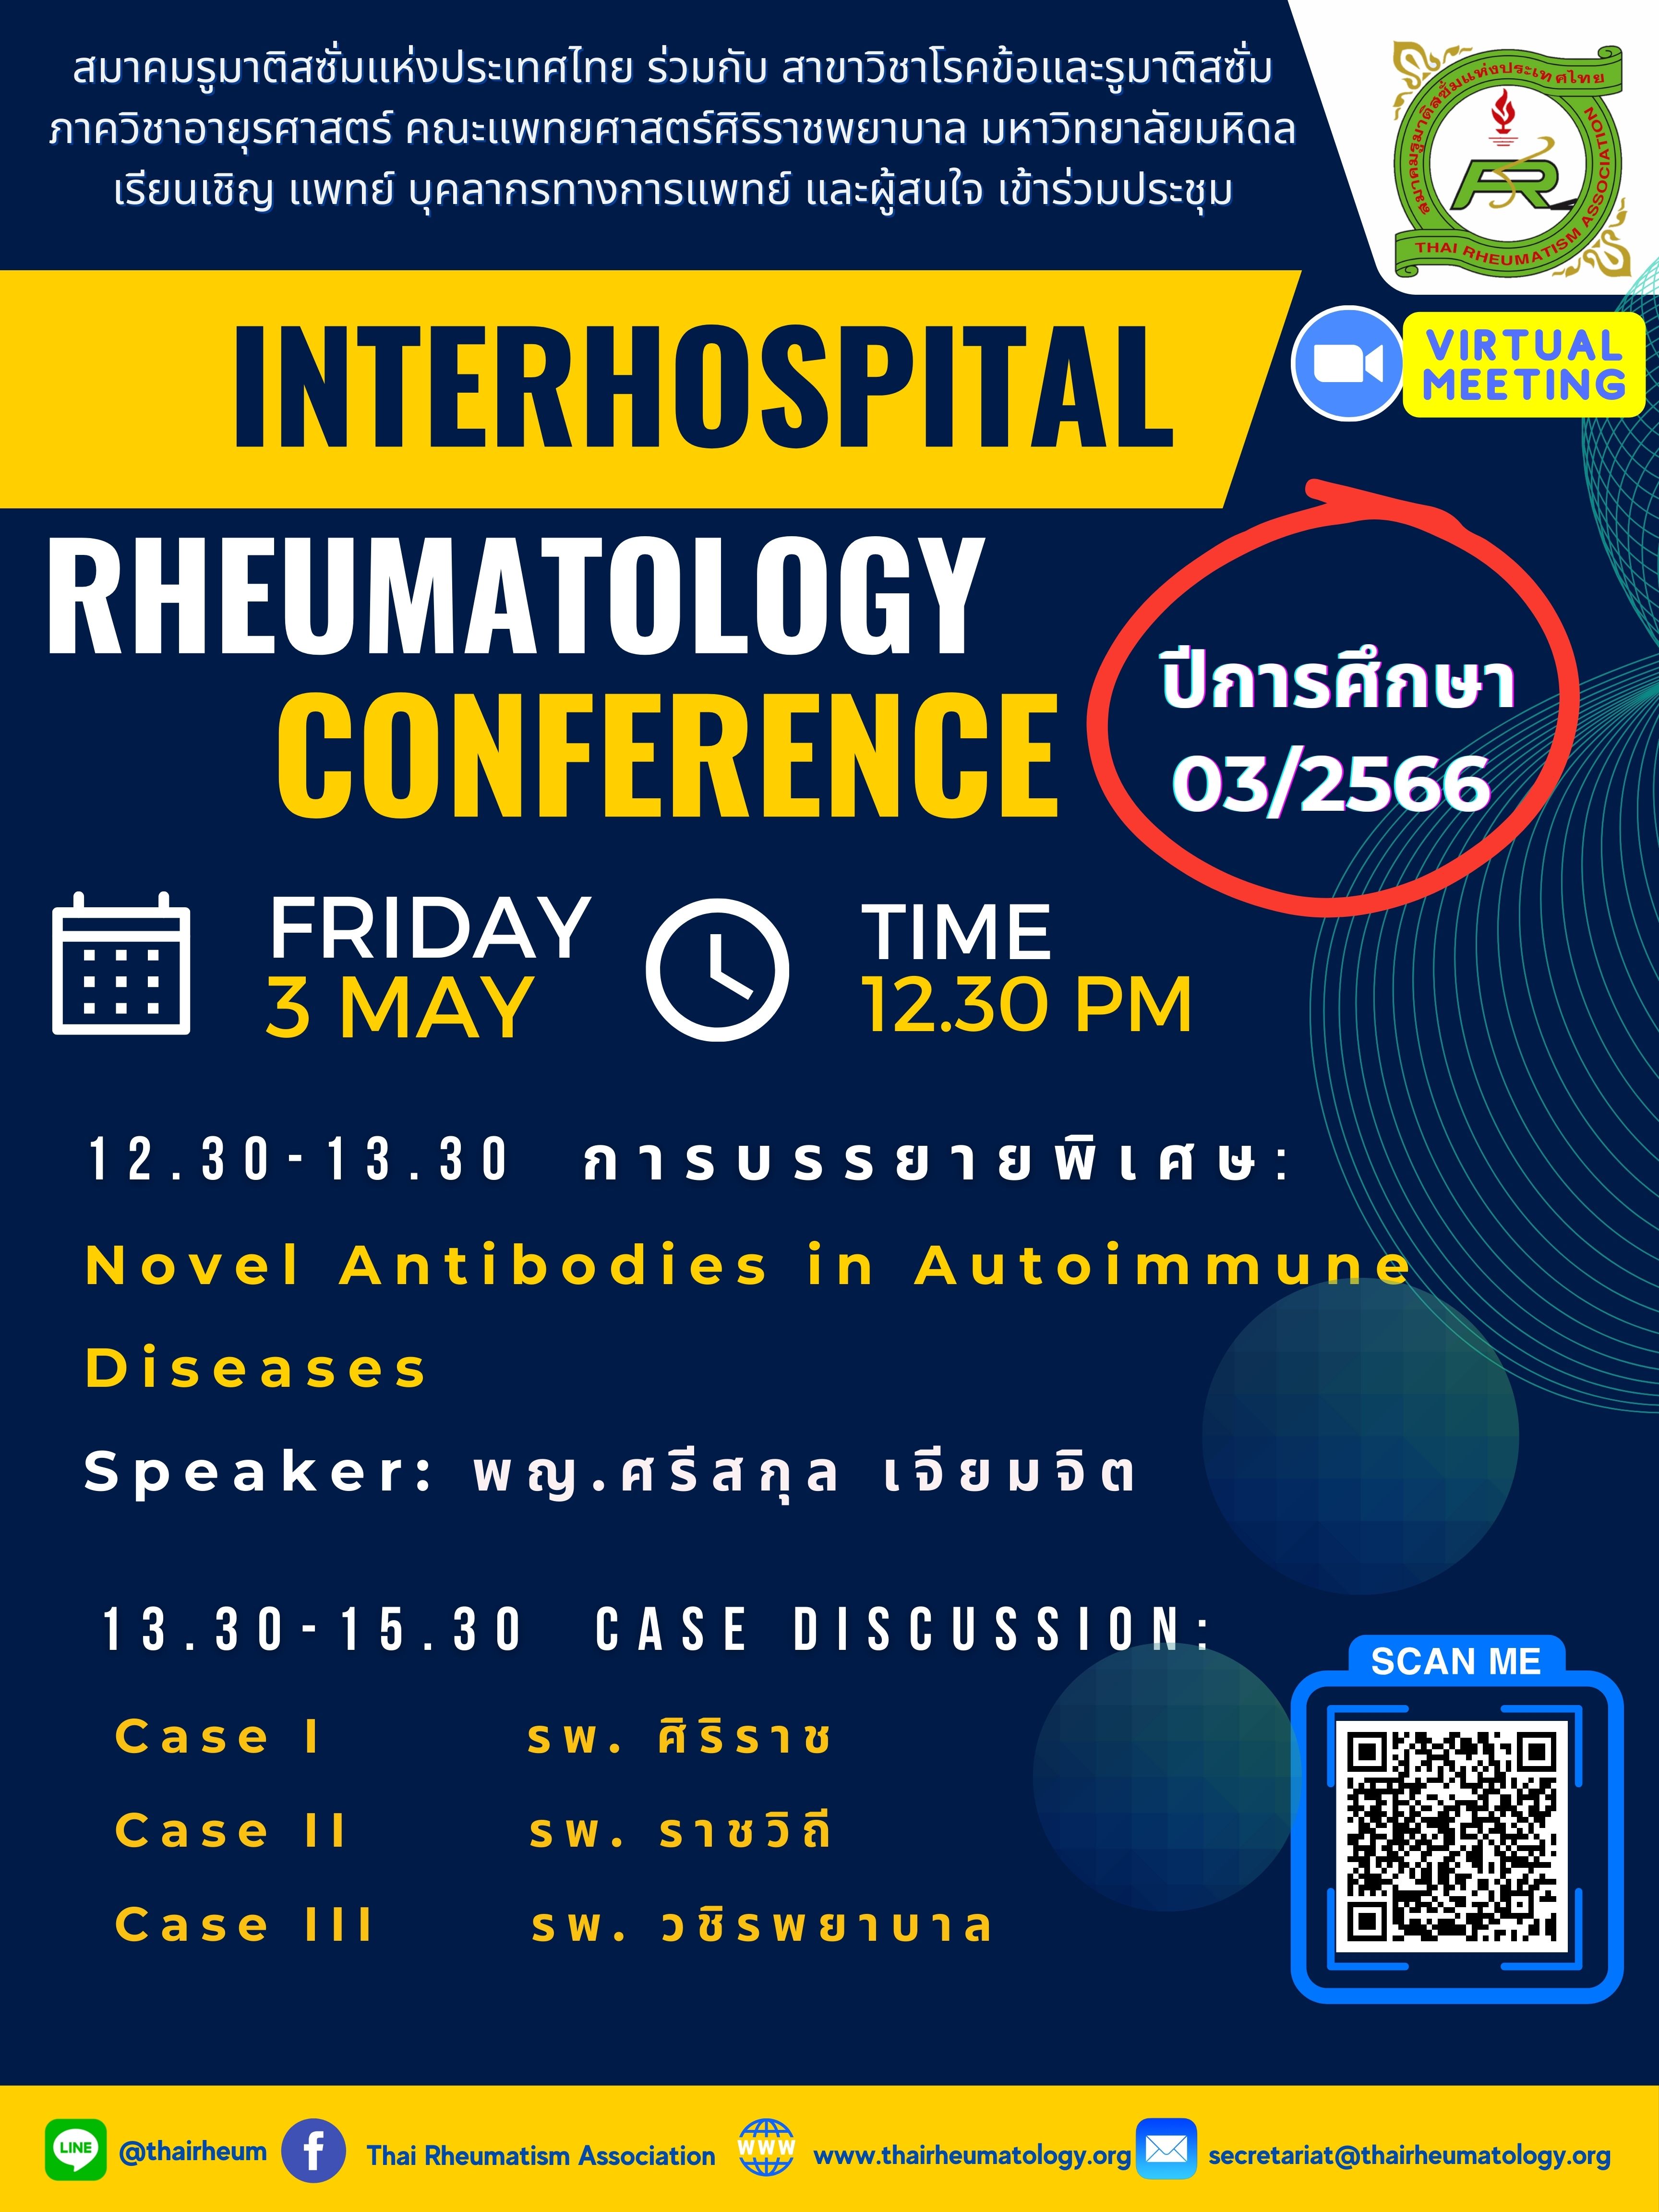 Interhospital rheumatology conference 3/2566